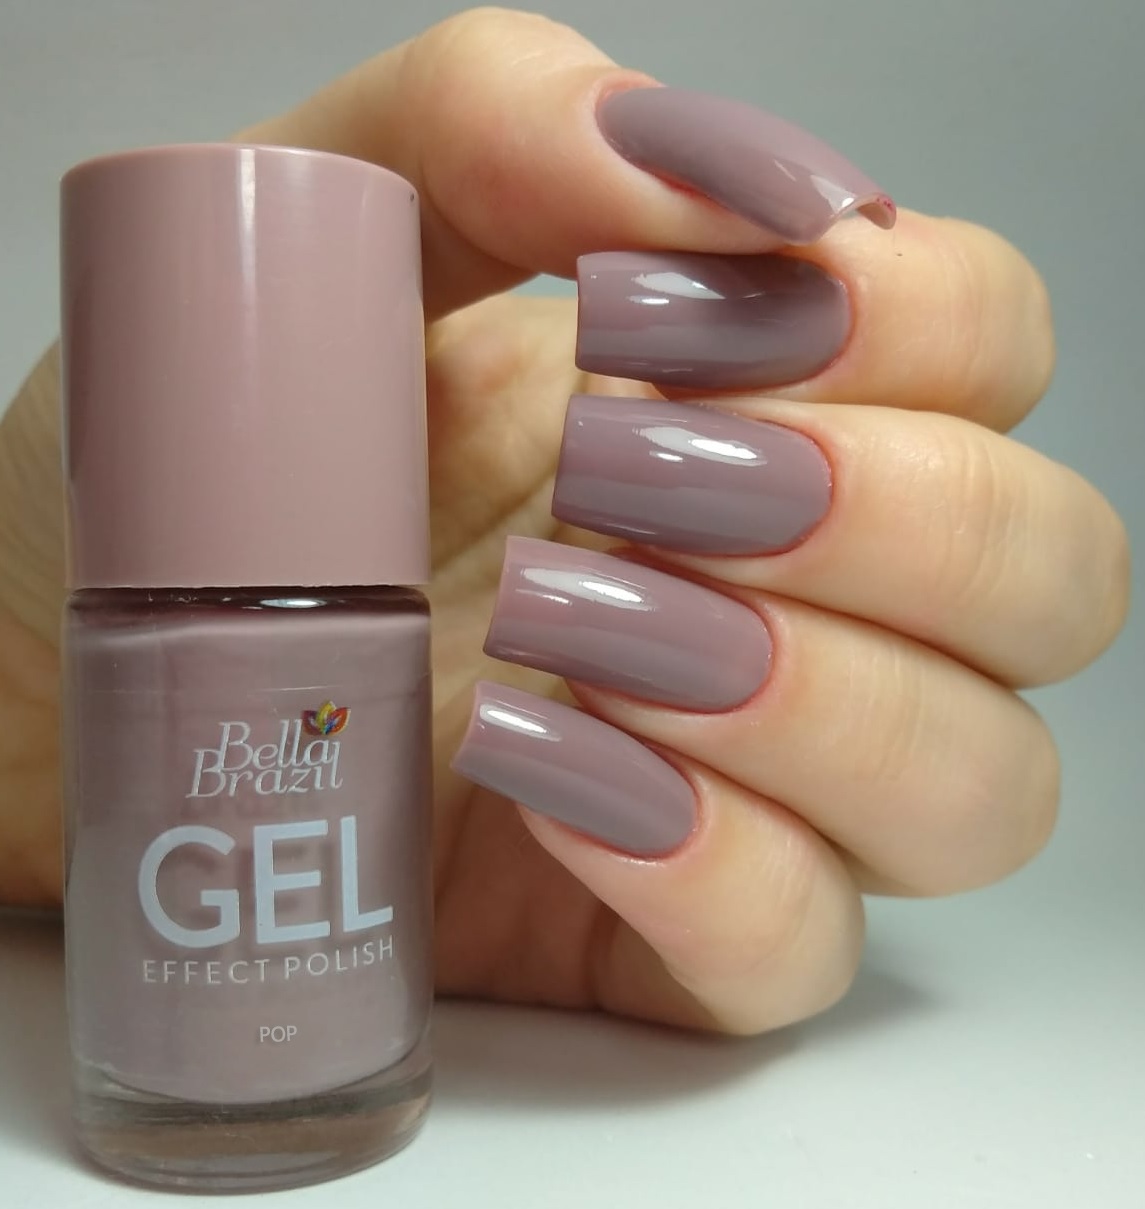 Esmalte Gel Effect Polish - Pop Bella Brazil 8ml